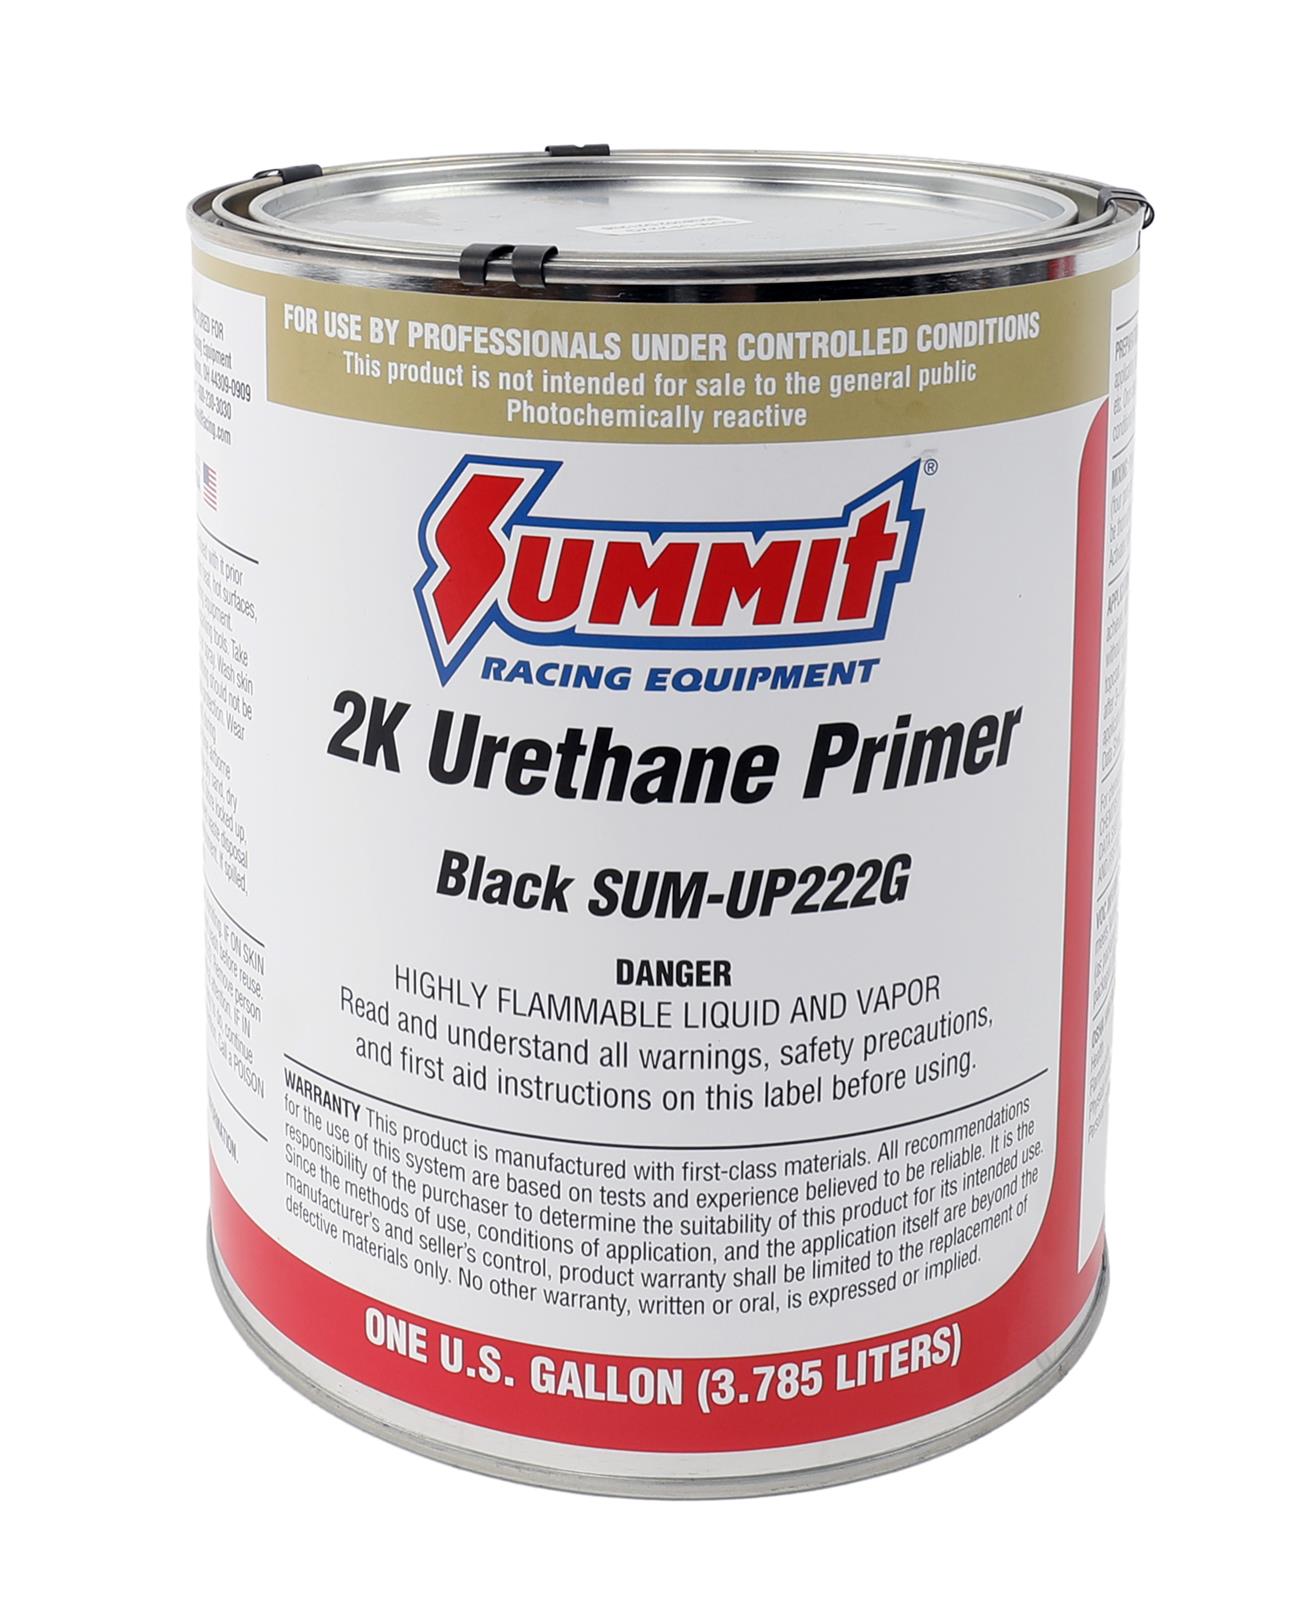 Summit Racing SUM-22-803 Summit Racing™ Quick Cut Polishing Compounds